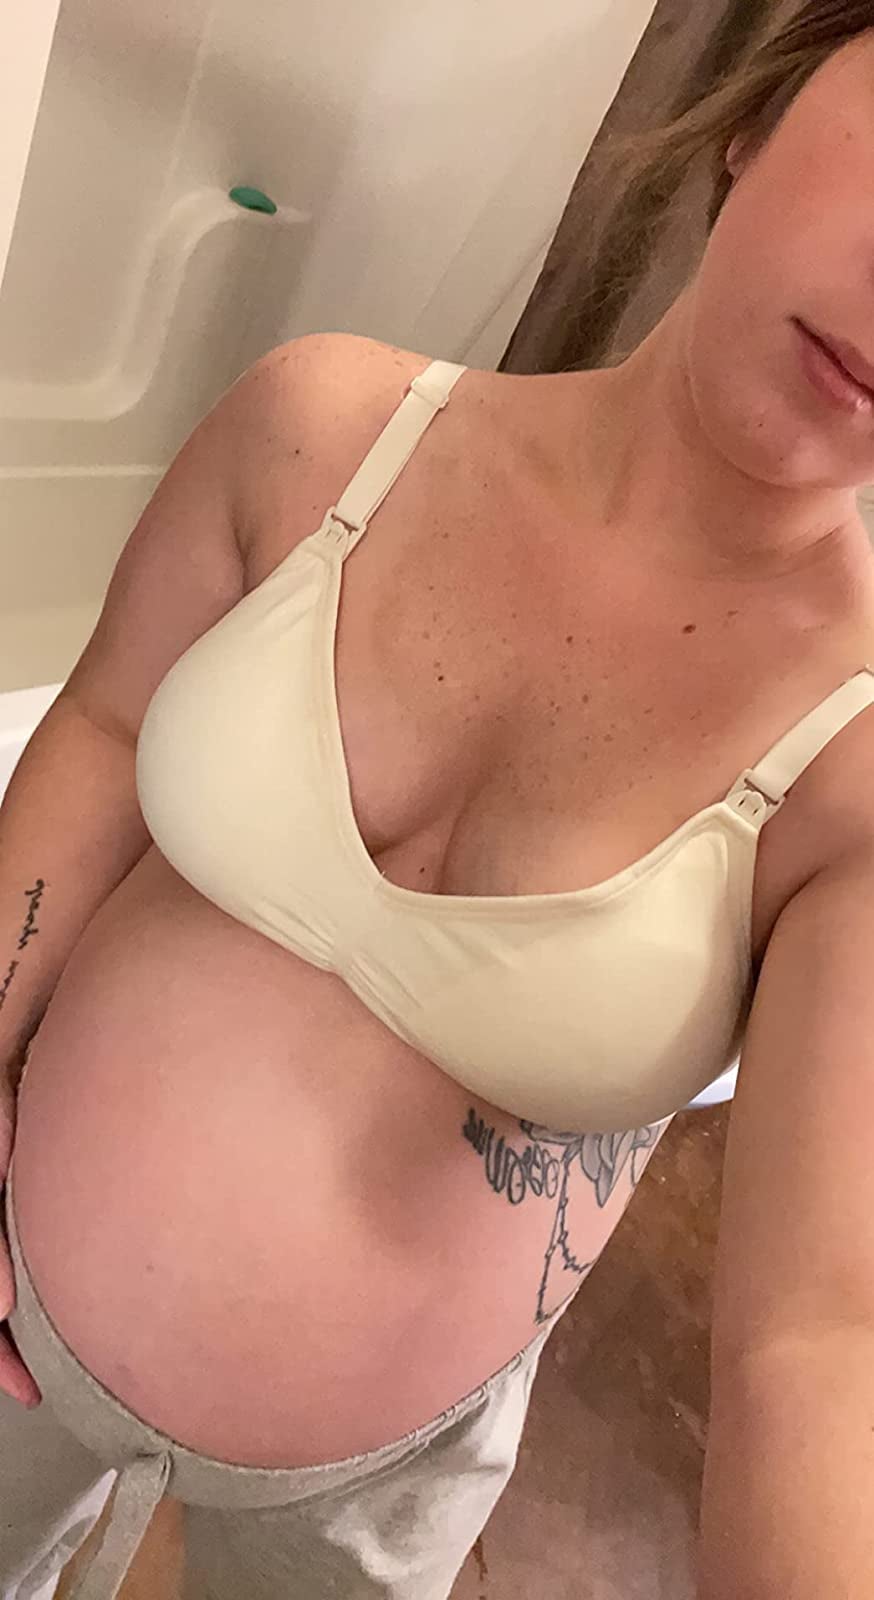 The Maternity nursing bra – Closely